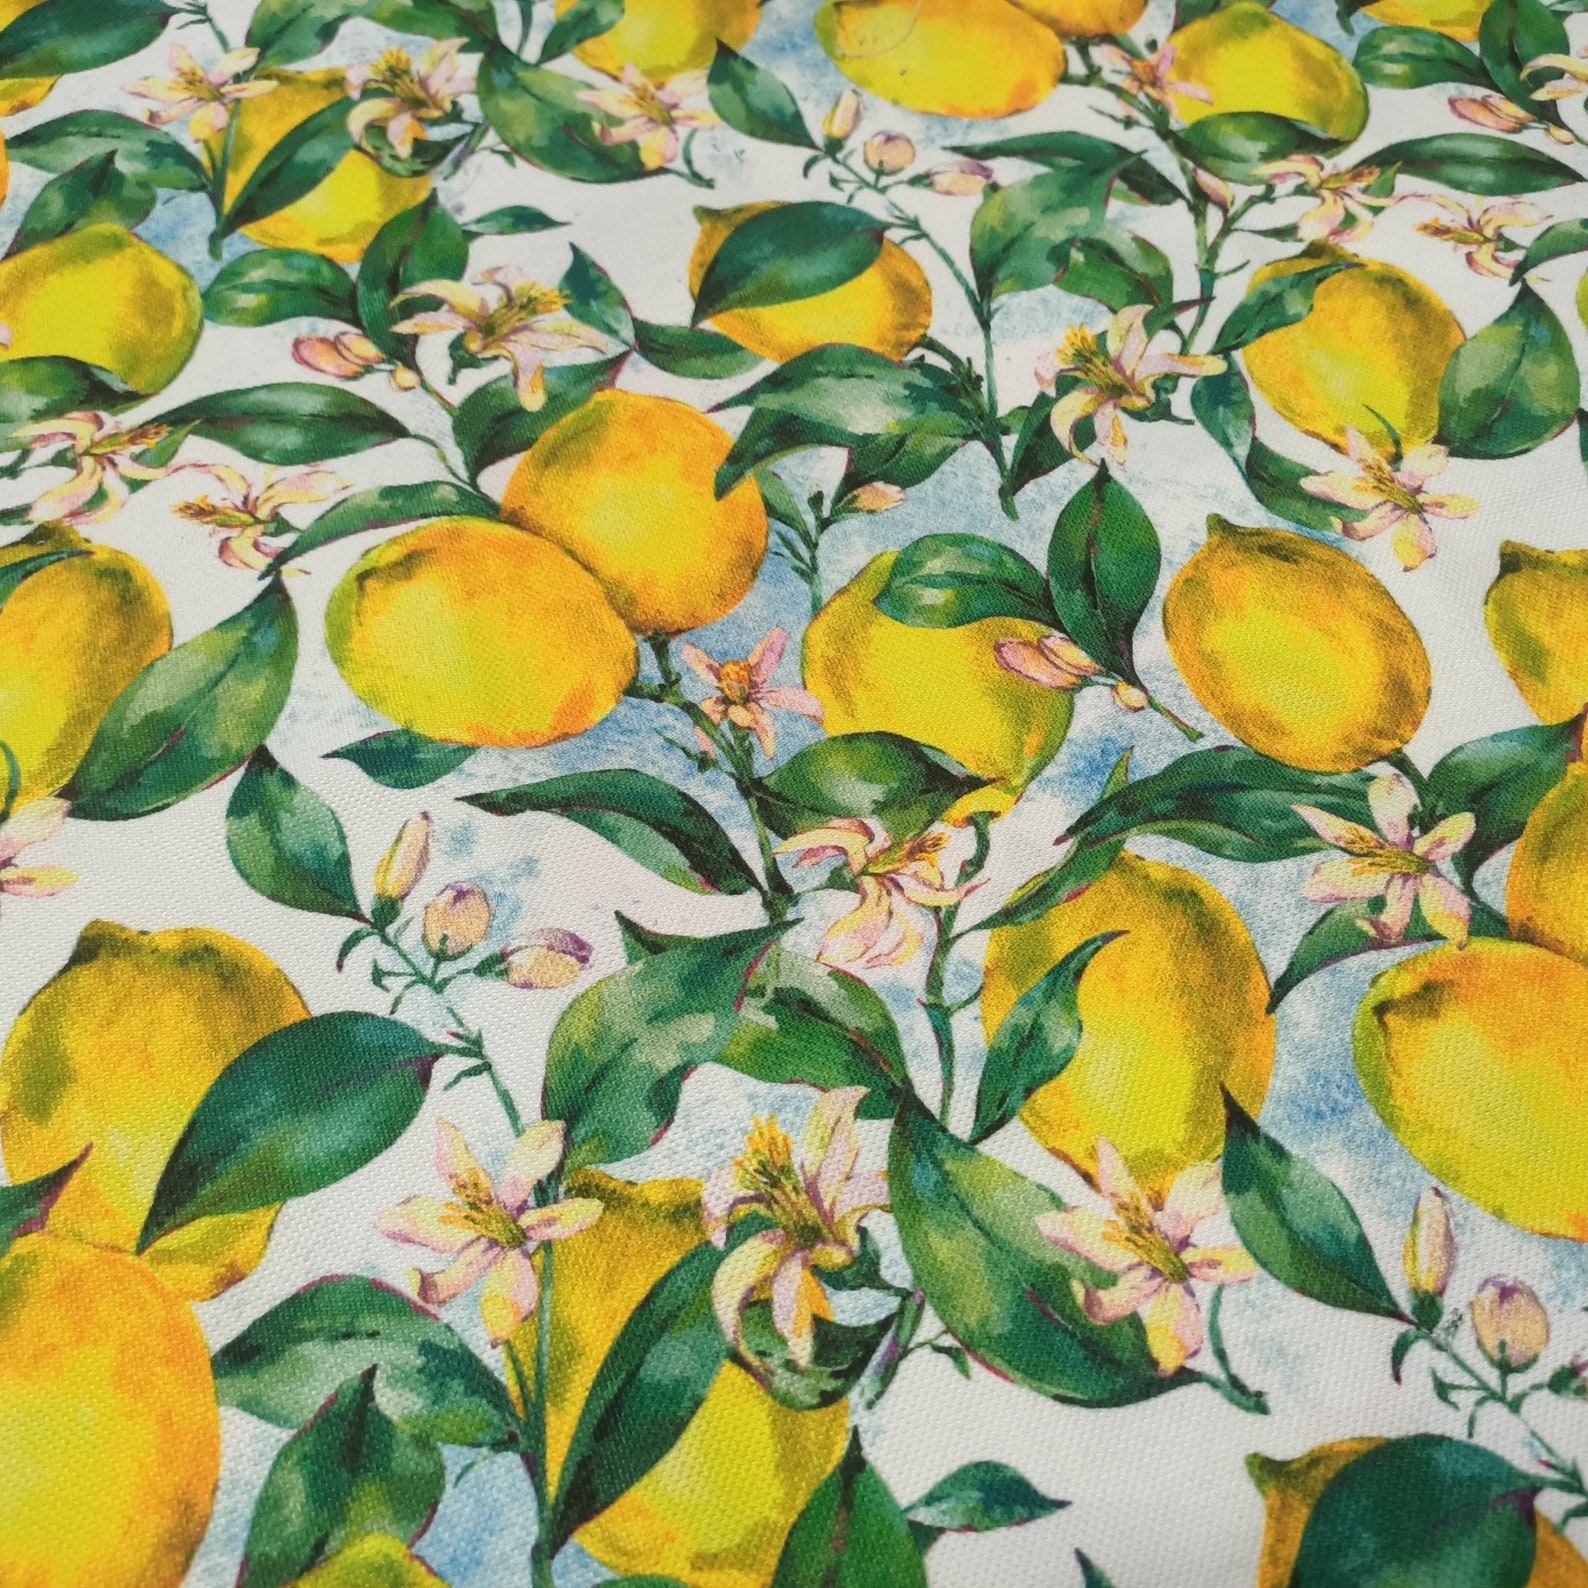 Vintage Lemon print fabric vintage patterned upholstery | Etsy